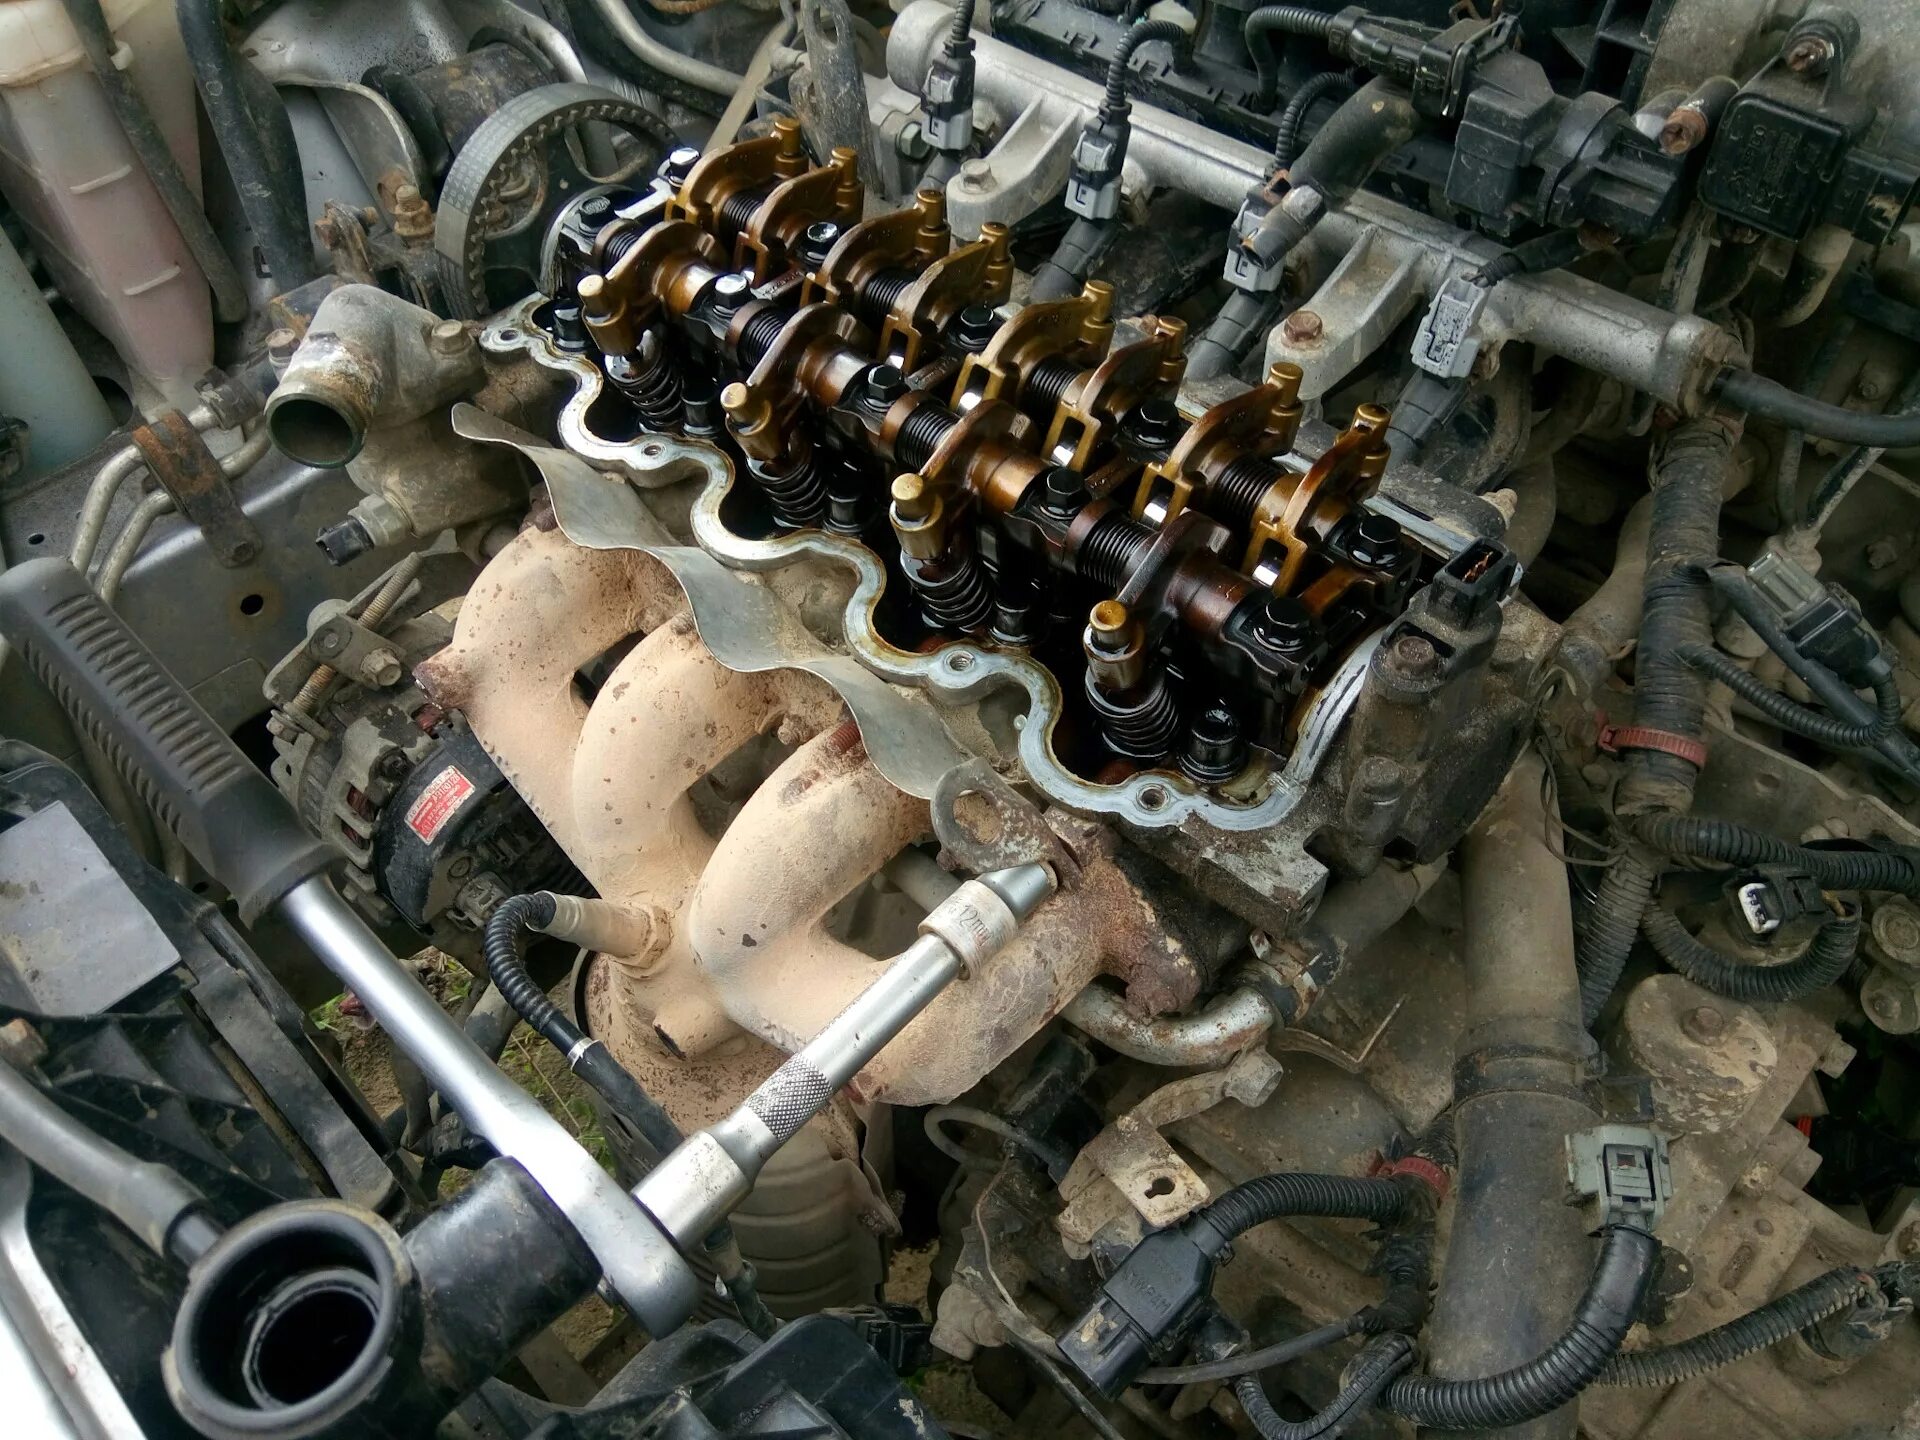 Ремонт двигателя акцент. Капремонт акцент 16 клапанов. Hyundai Accent 2003 год капиталка двигателя. Клапана на Хендай акцент ТАГАЗ 1.5. Капремонт двигателя Хендай акцент 1.5 16 клапанов.